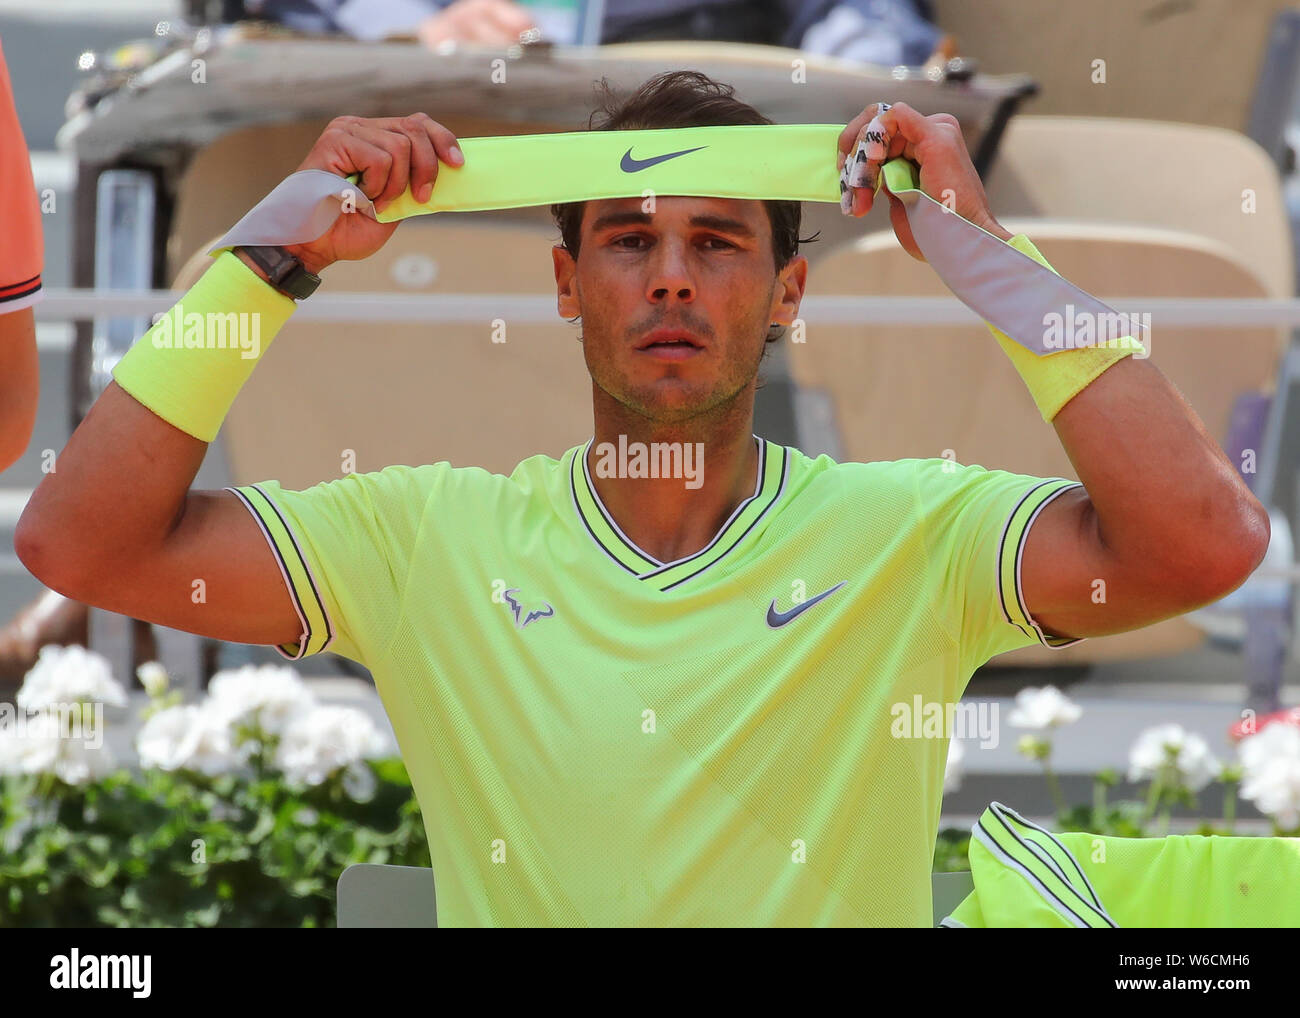 Portrait of Spanish tennis player Rafael Nadal tying headband